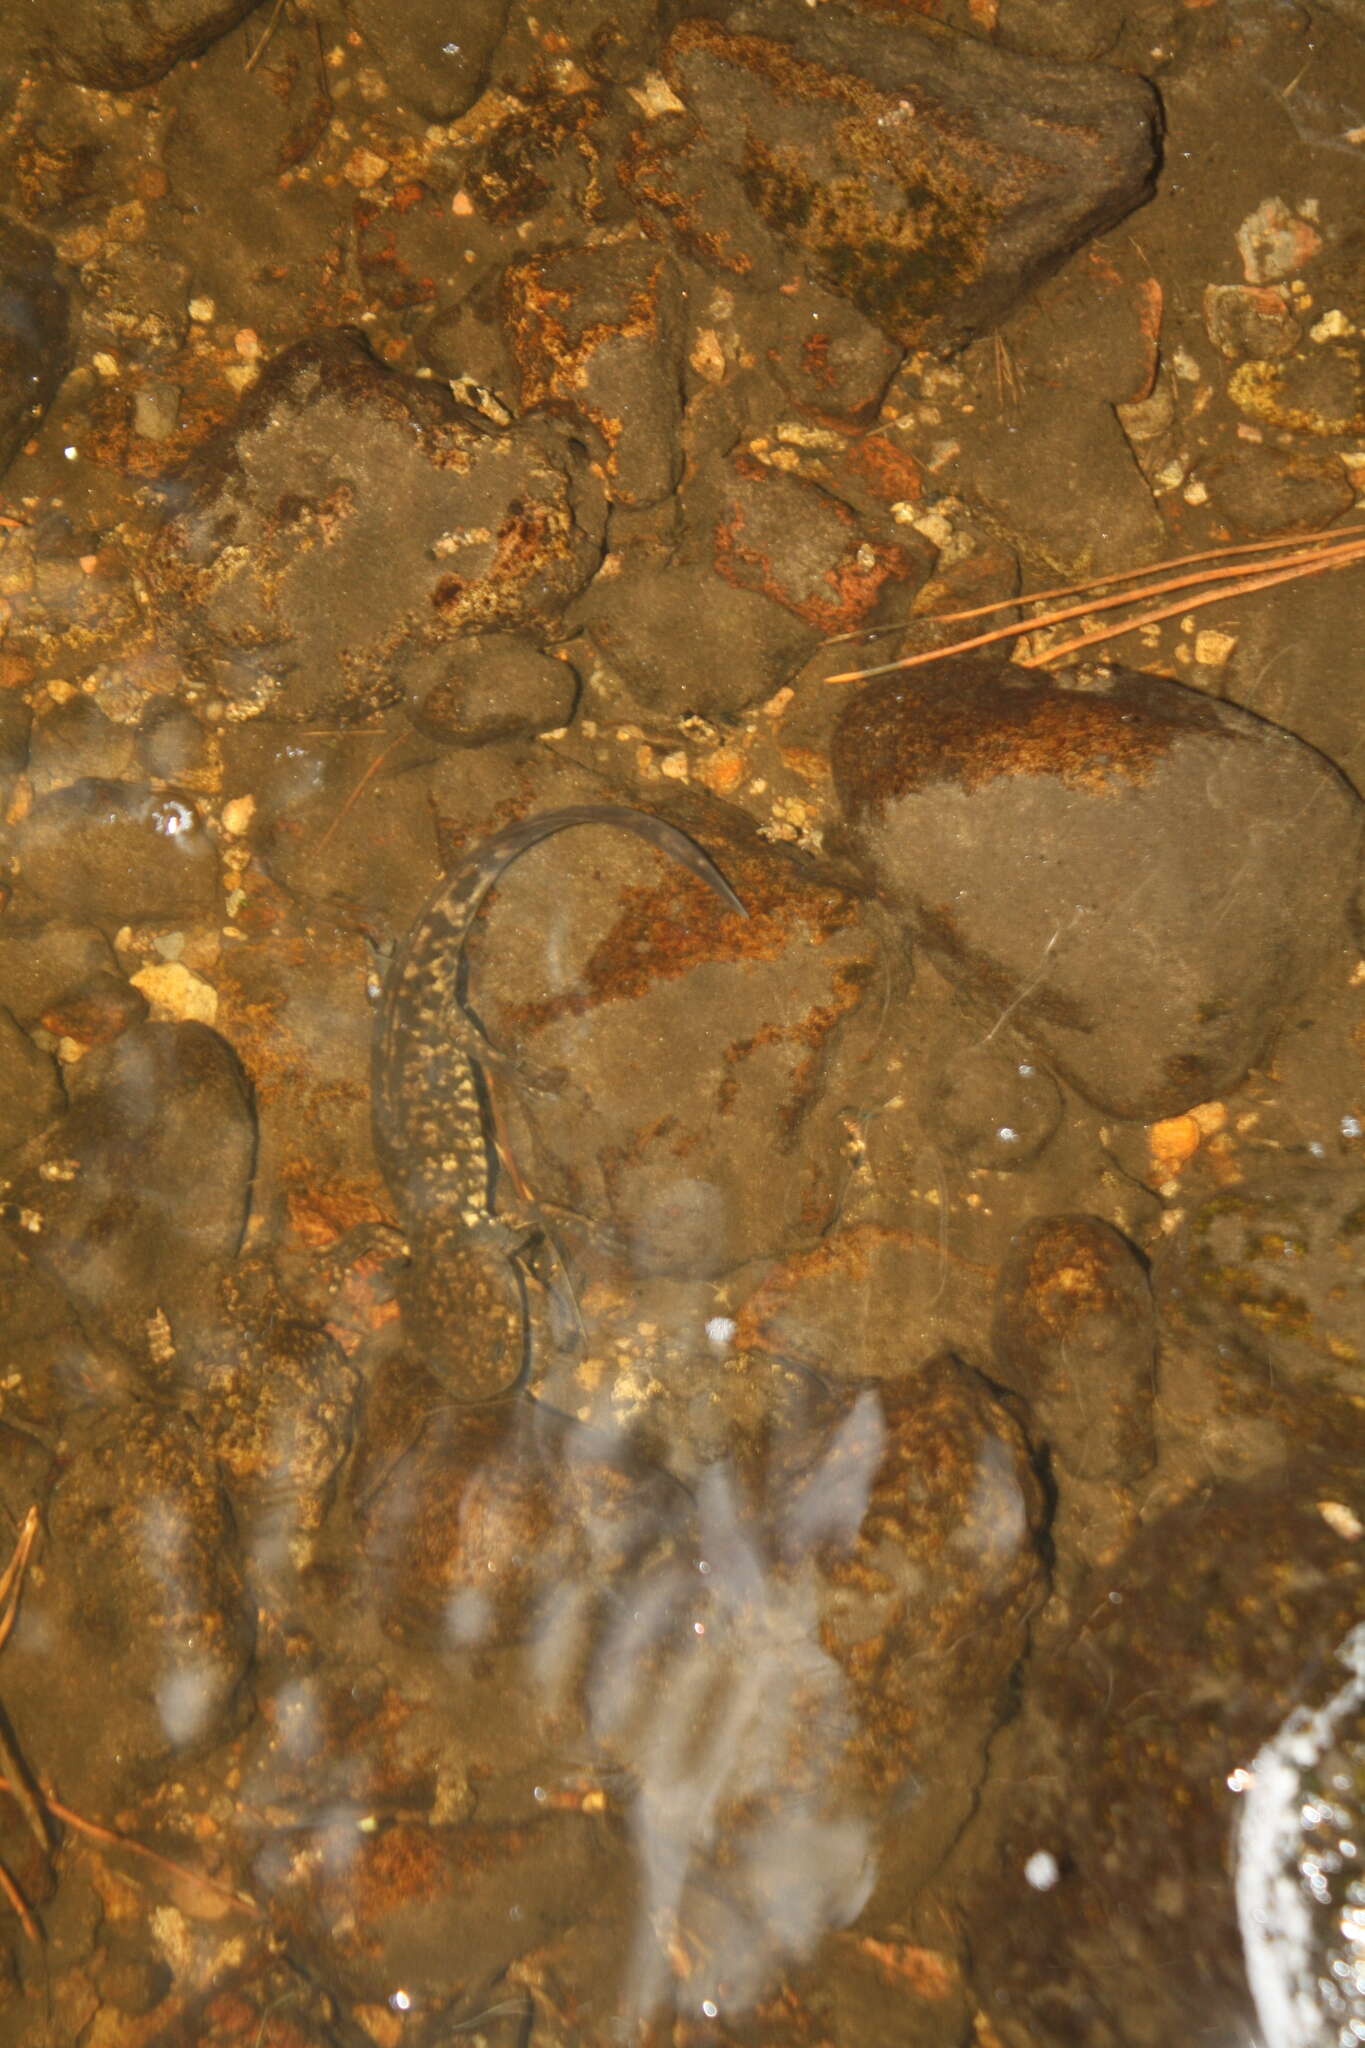 Image of Leora's Stream Salamander